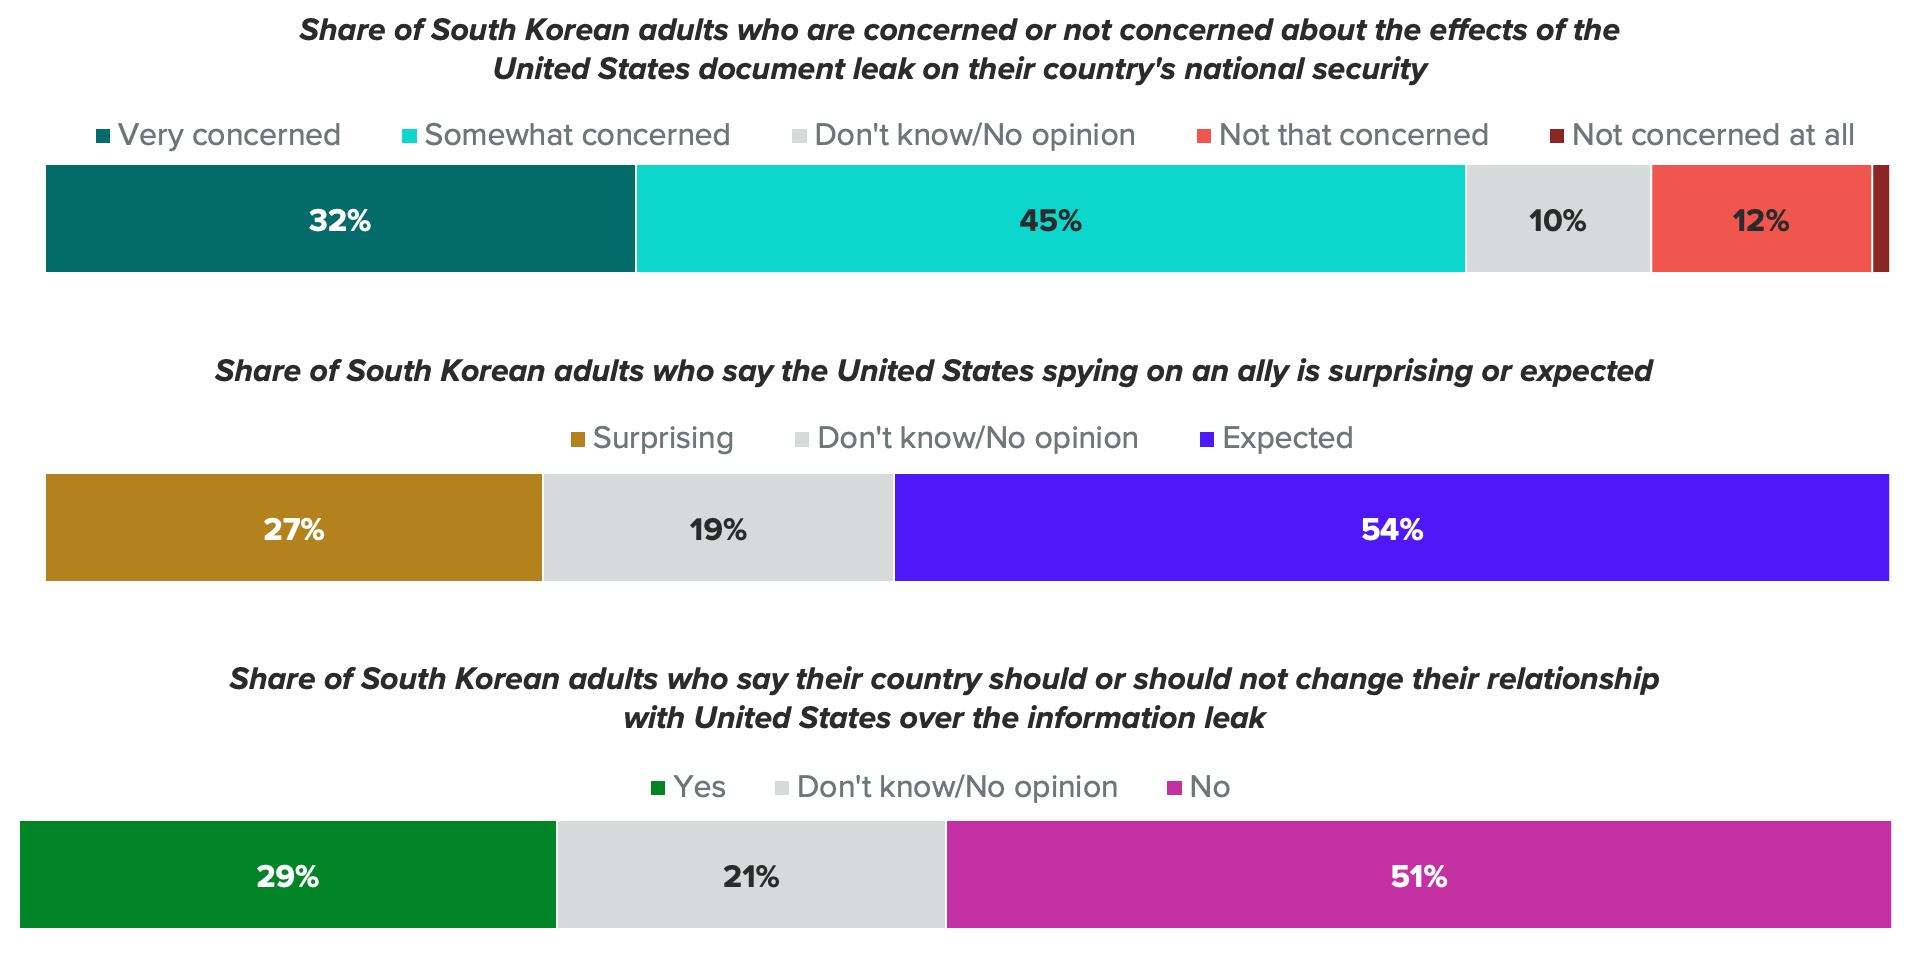 Despite Concern Over Leaks, Few South Koreans Want Change in U.S.-South Korea Relationship